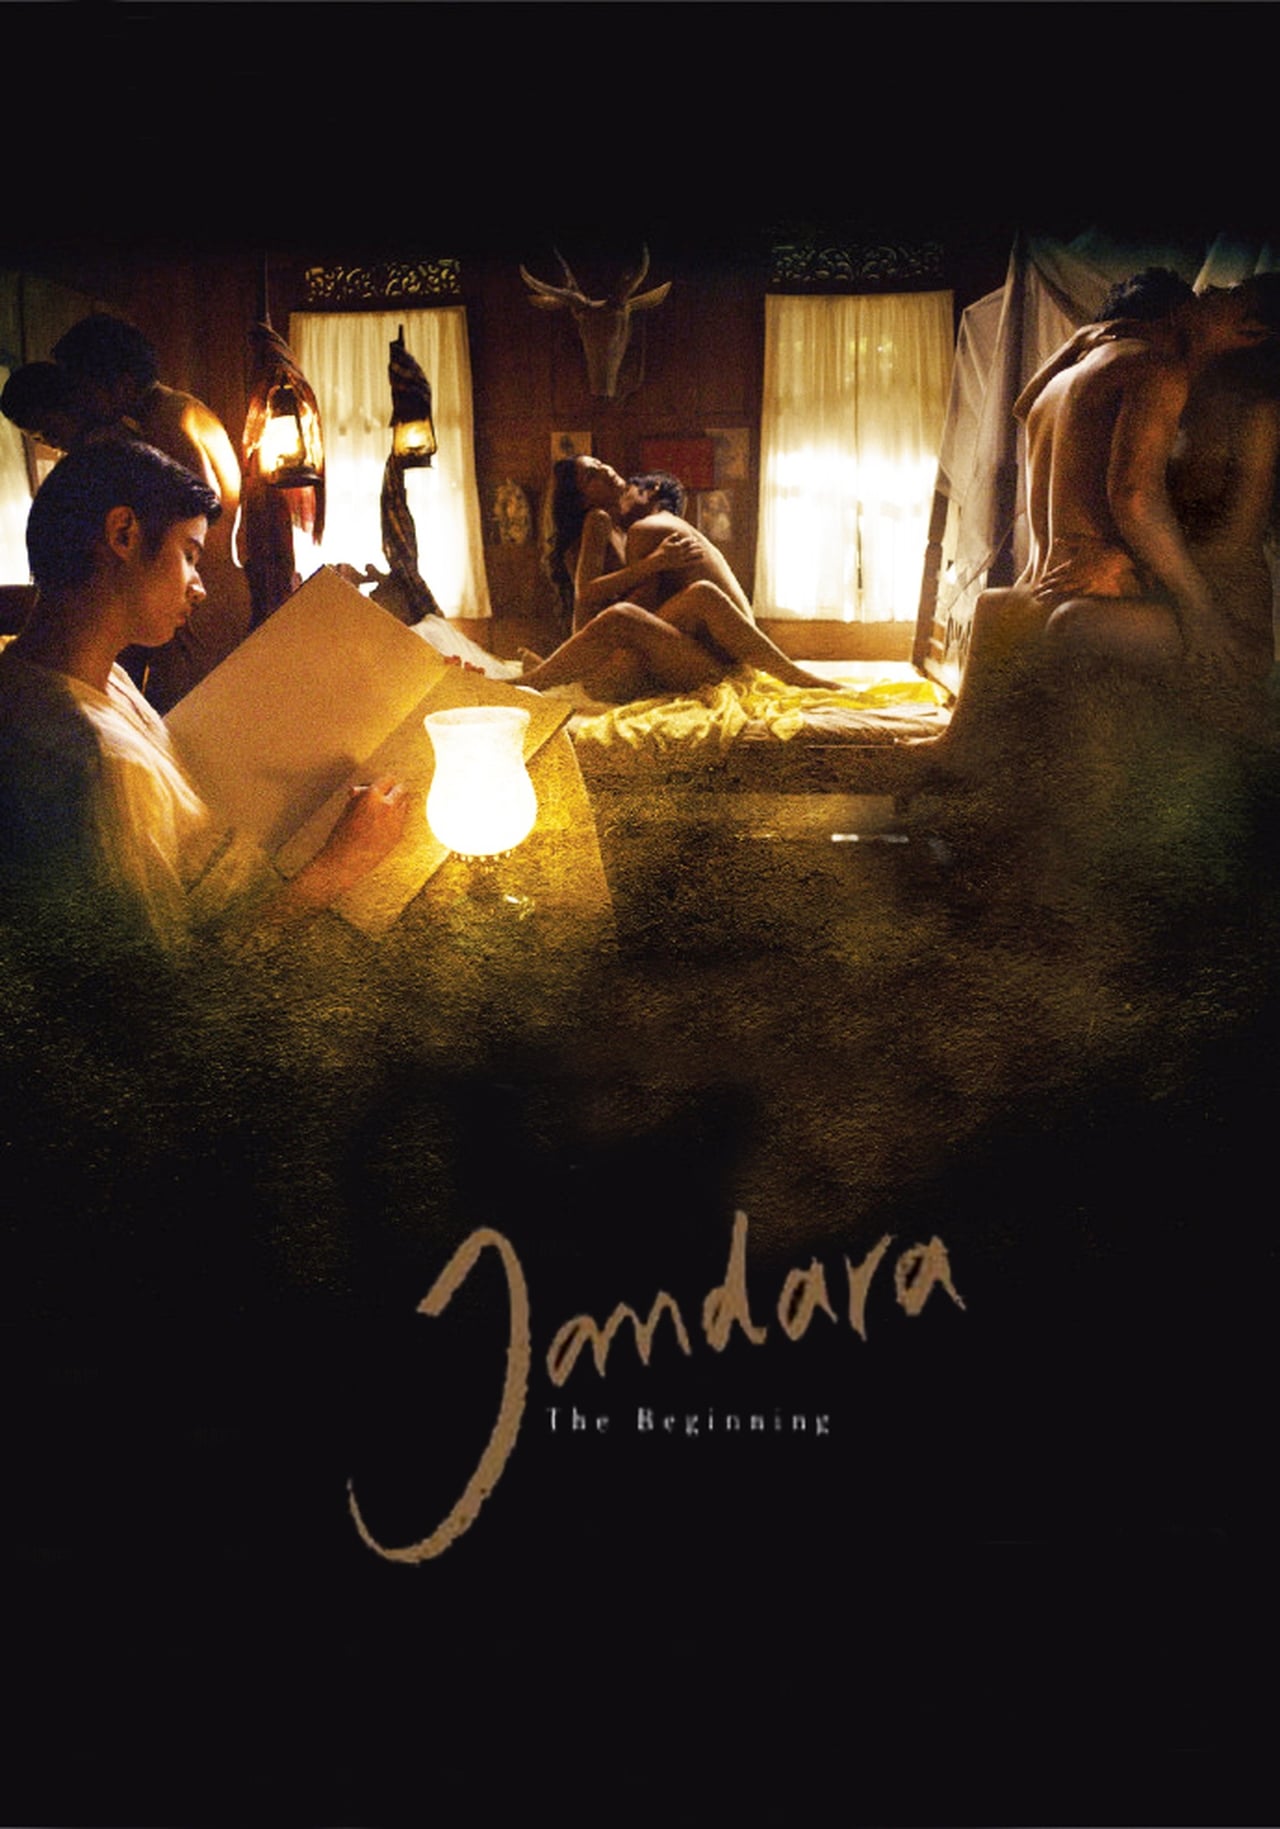 Jan Dara: The Beginning (2012) Screenshot 1